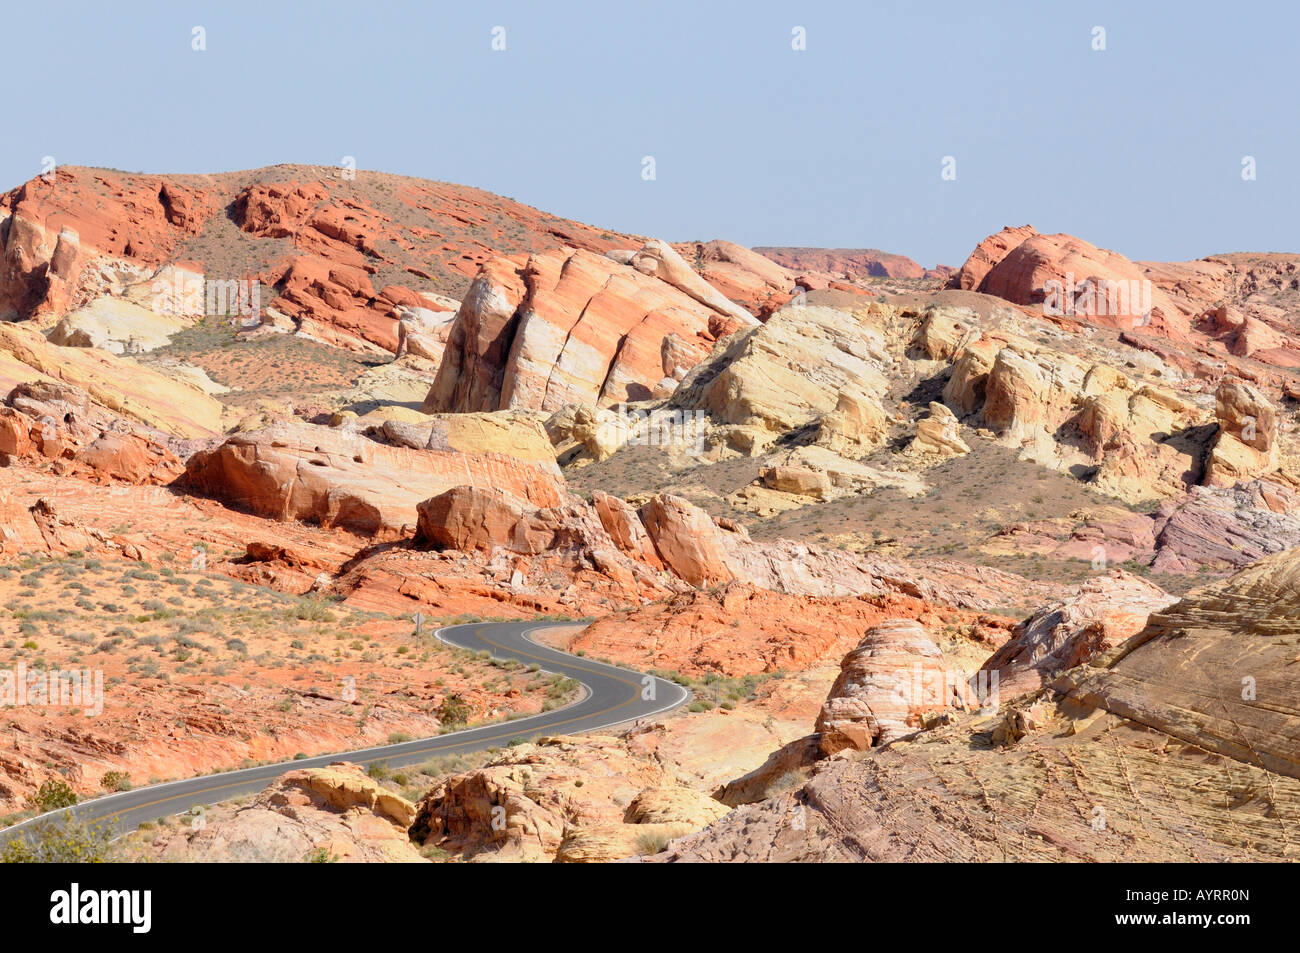 A road winding through rocky desert Stock Photo